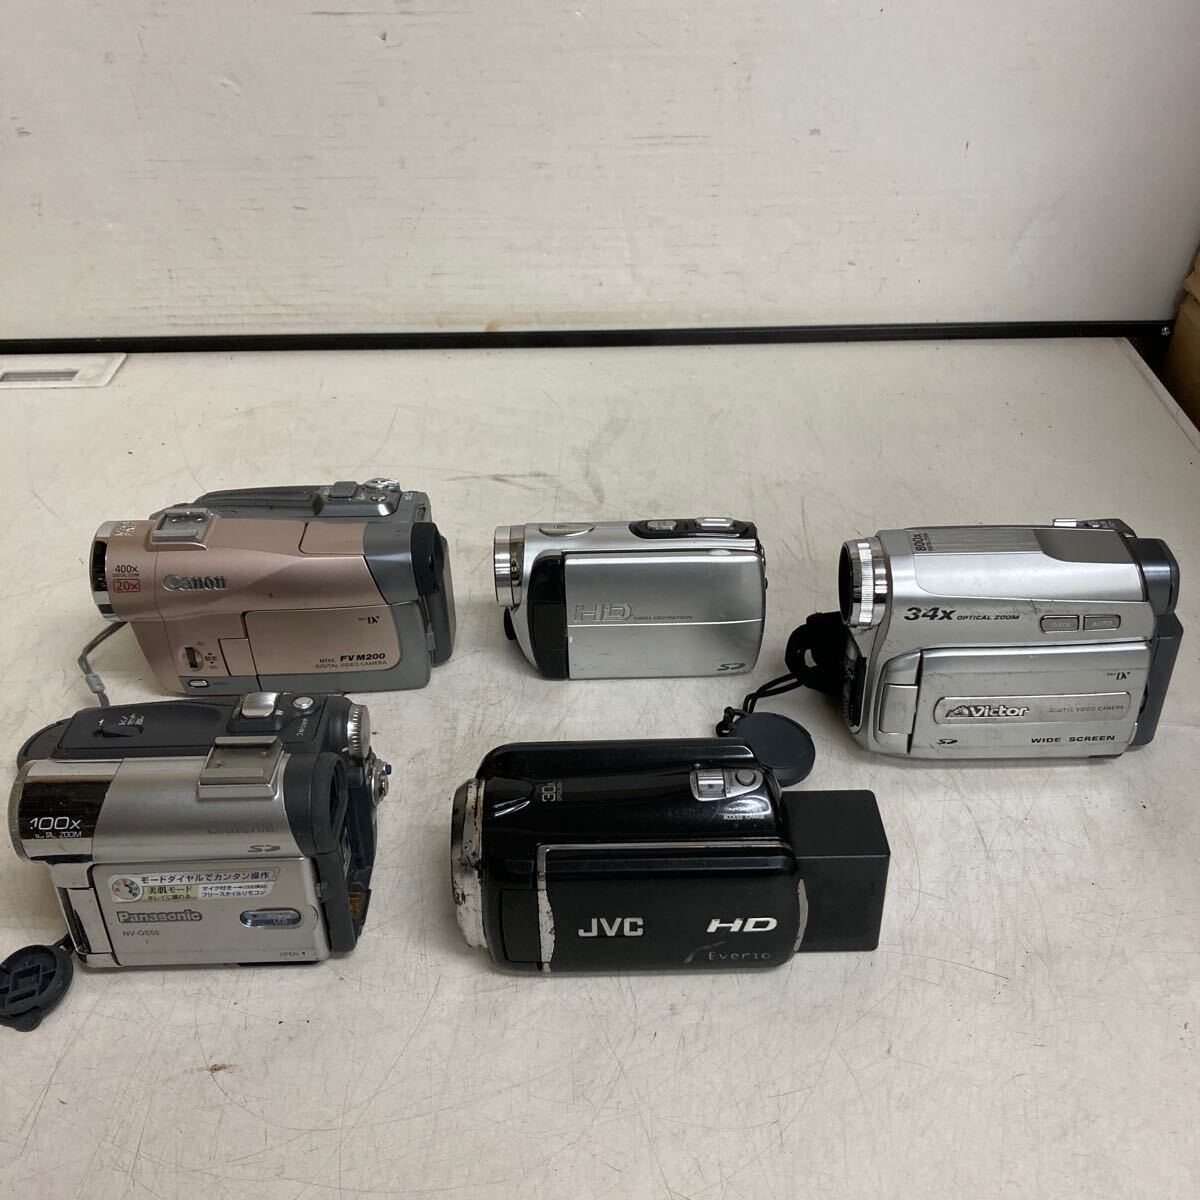 L002 ビデオカメラ9台/8mmカメラ 1台/ 合わせて10台まとめて/SONY Victor FUJICAなど 動作未確認 ジャンク品の画像3